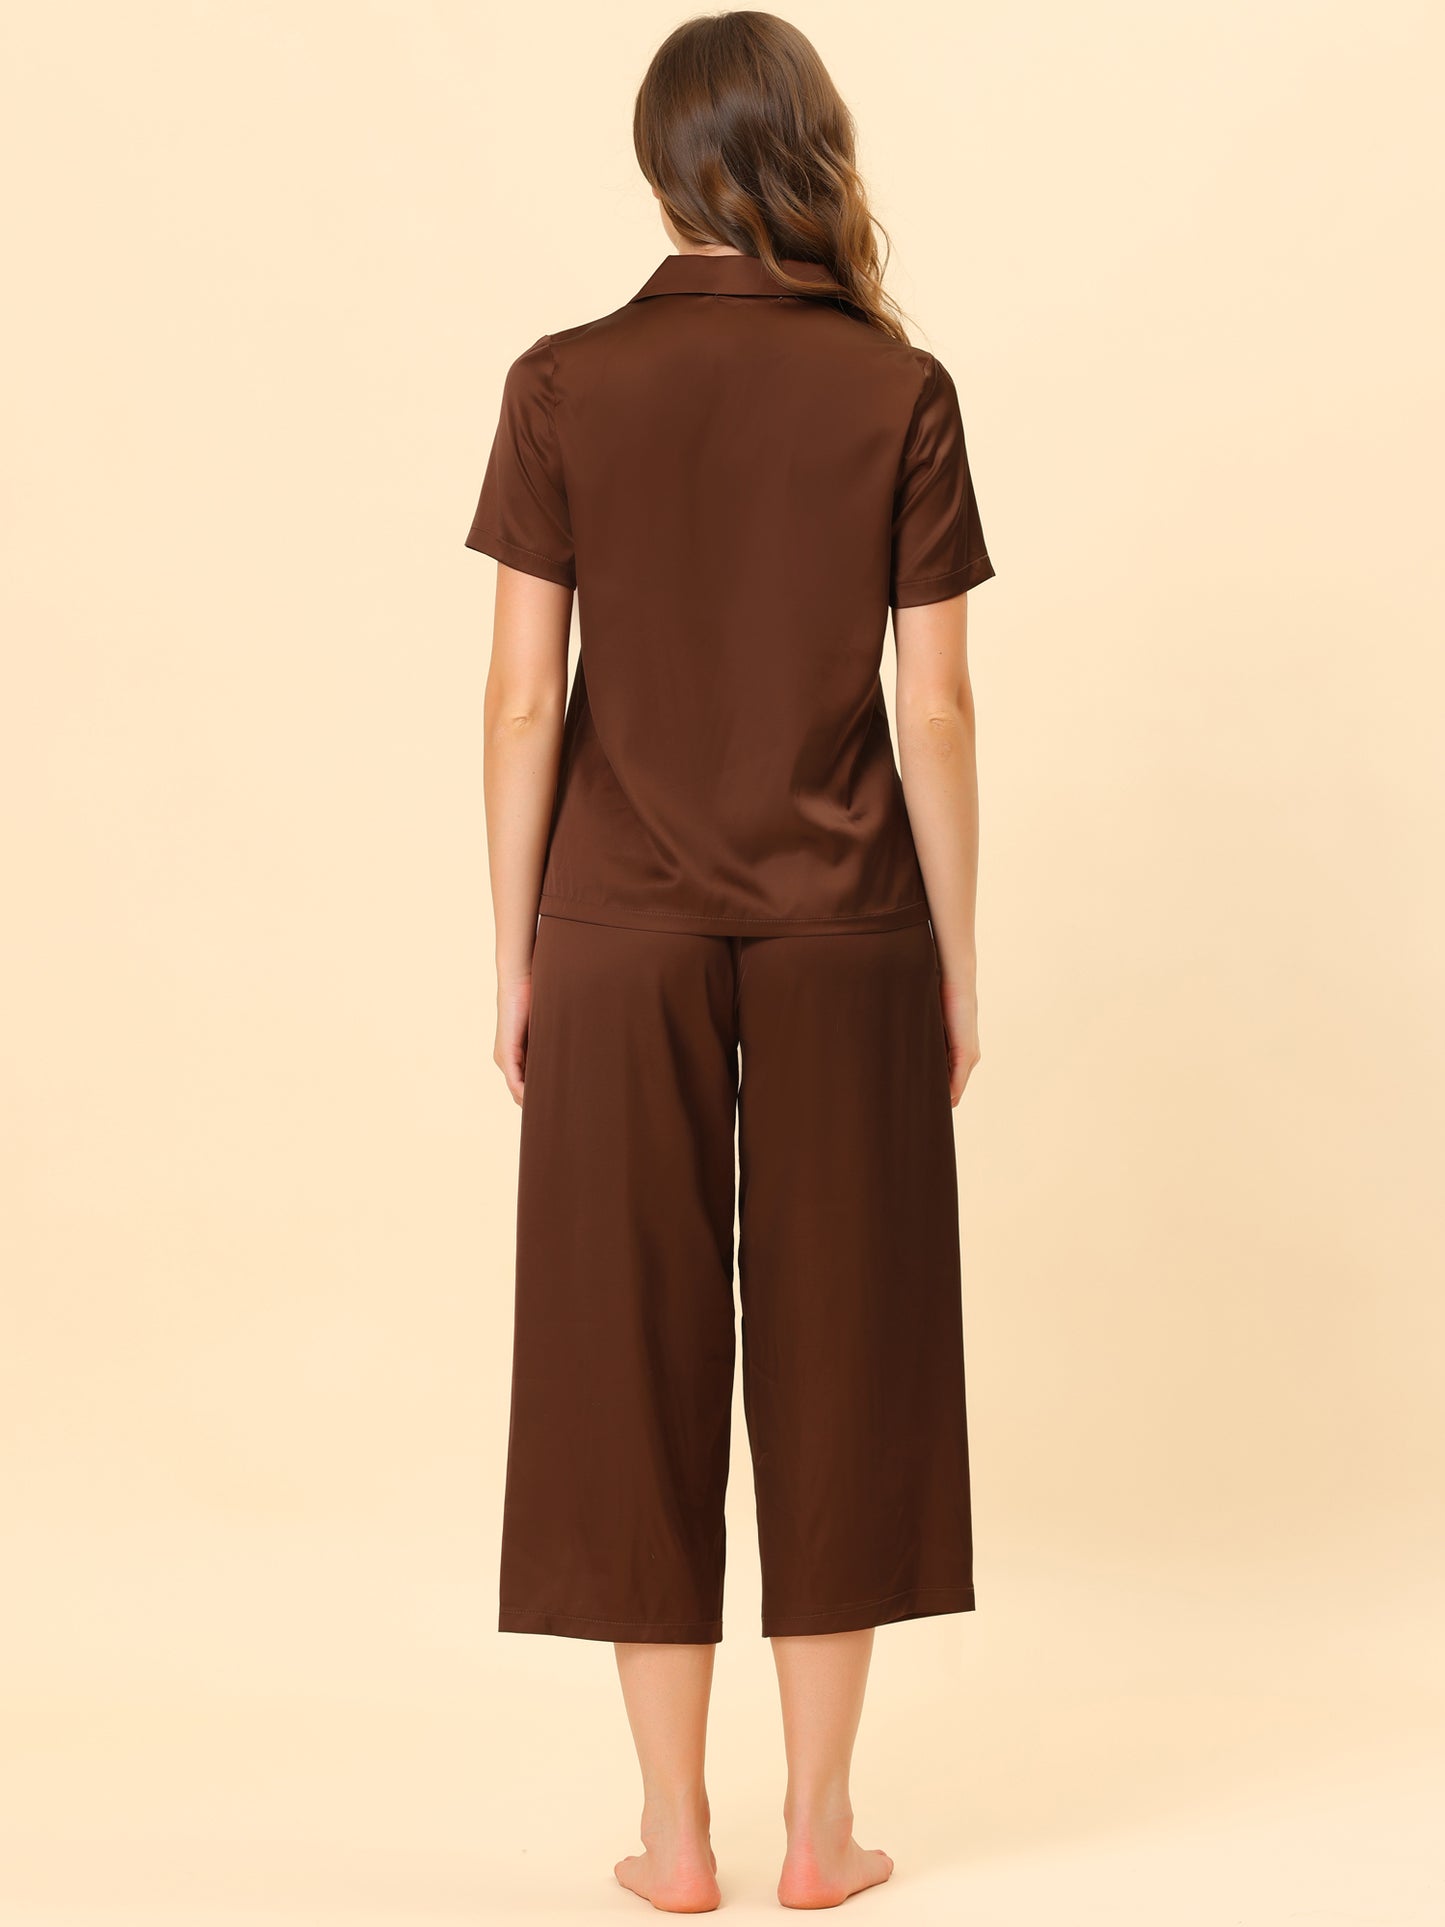 cheibear Pajama Loungewear Tops and Capri Pants Satin Sets Brown